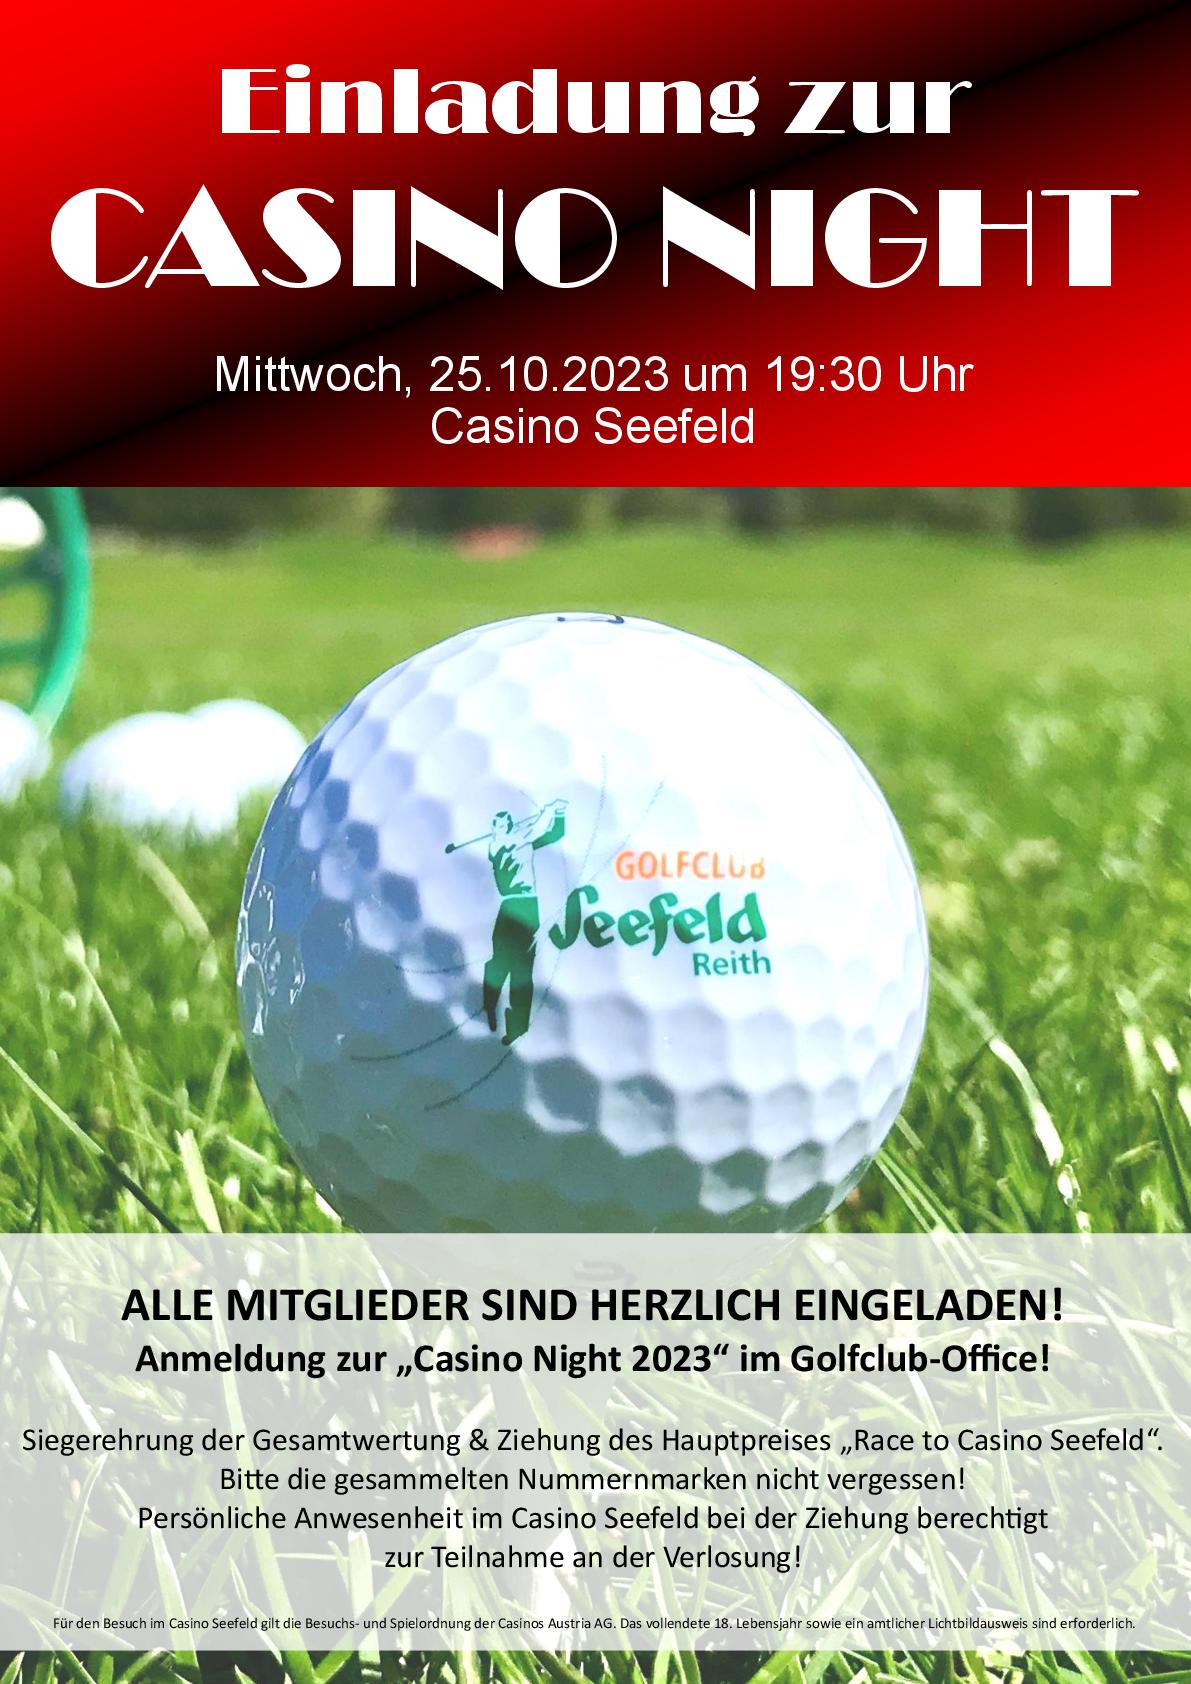 Golfclub Seefeld Reith Casino Night 2023 jpeg